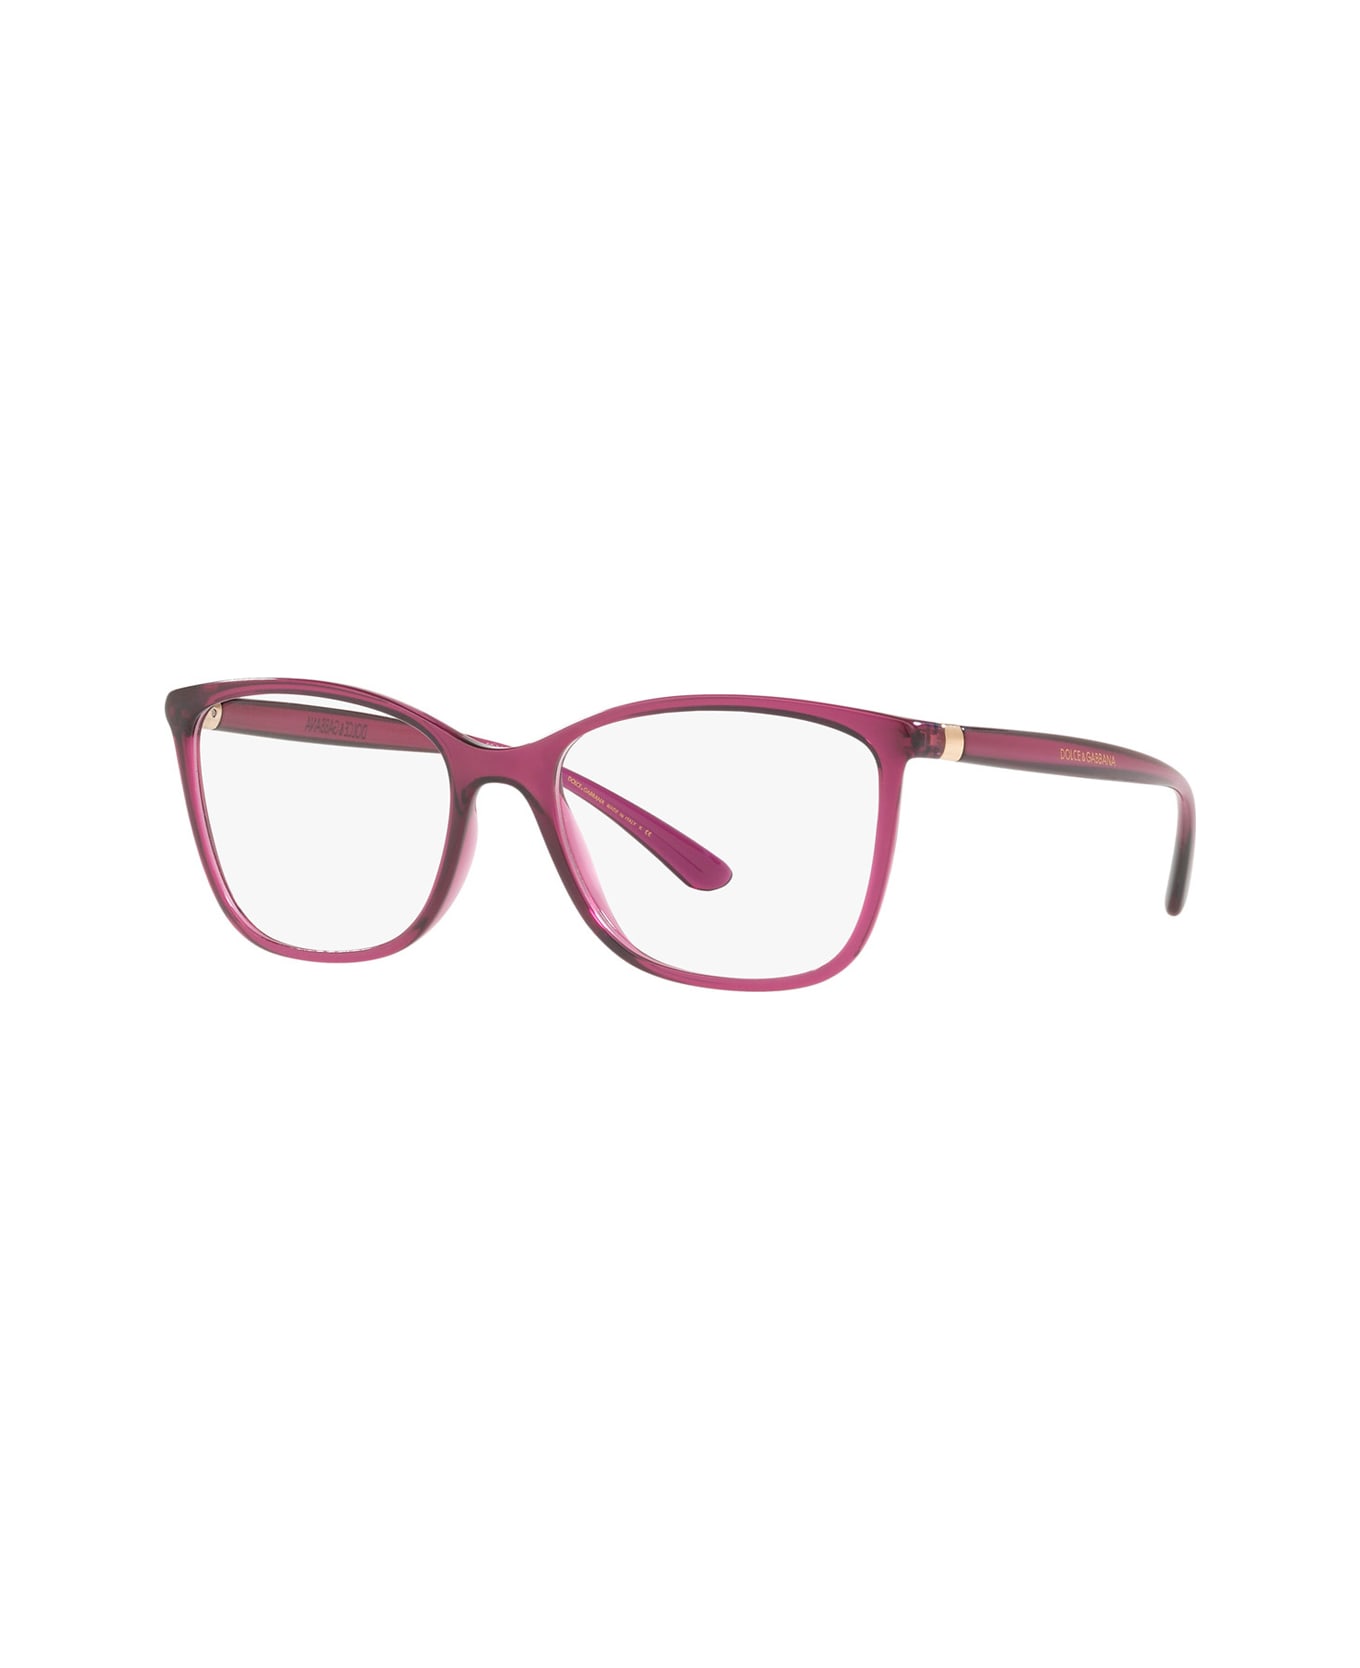 Dolce & Gabbana Eyewear Dg5026 1754 Glasses - Rosso アイウェア